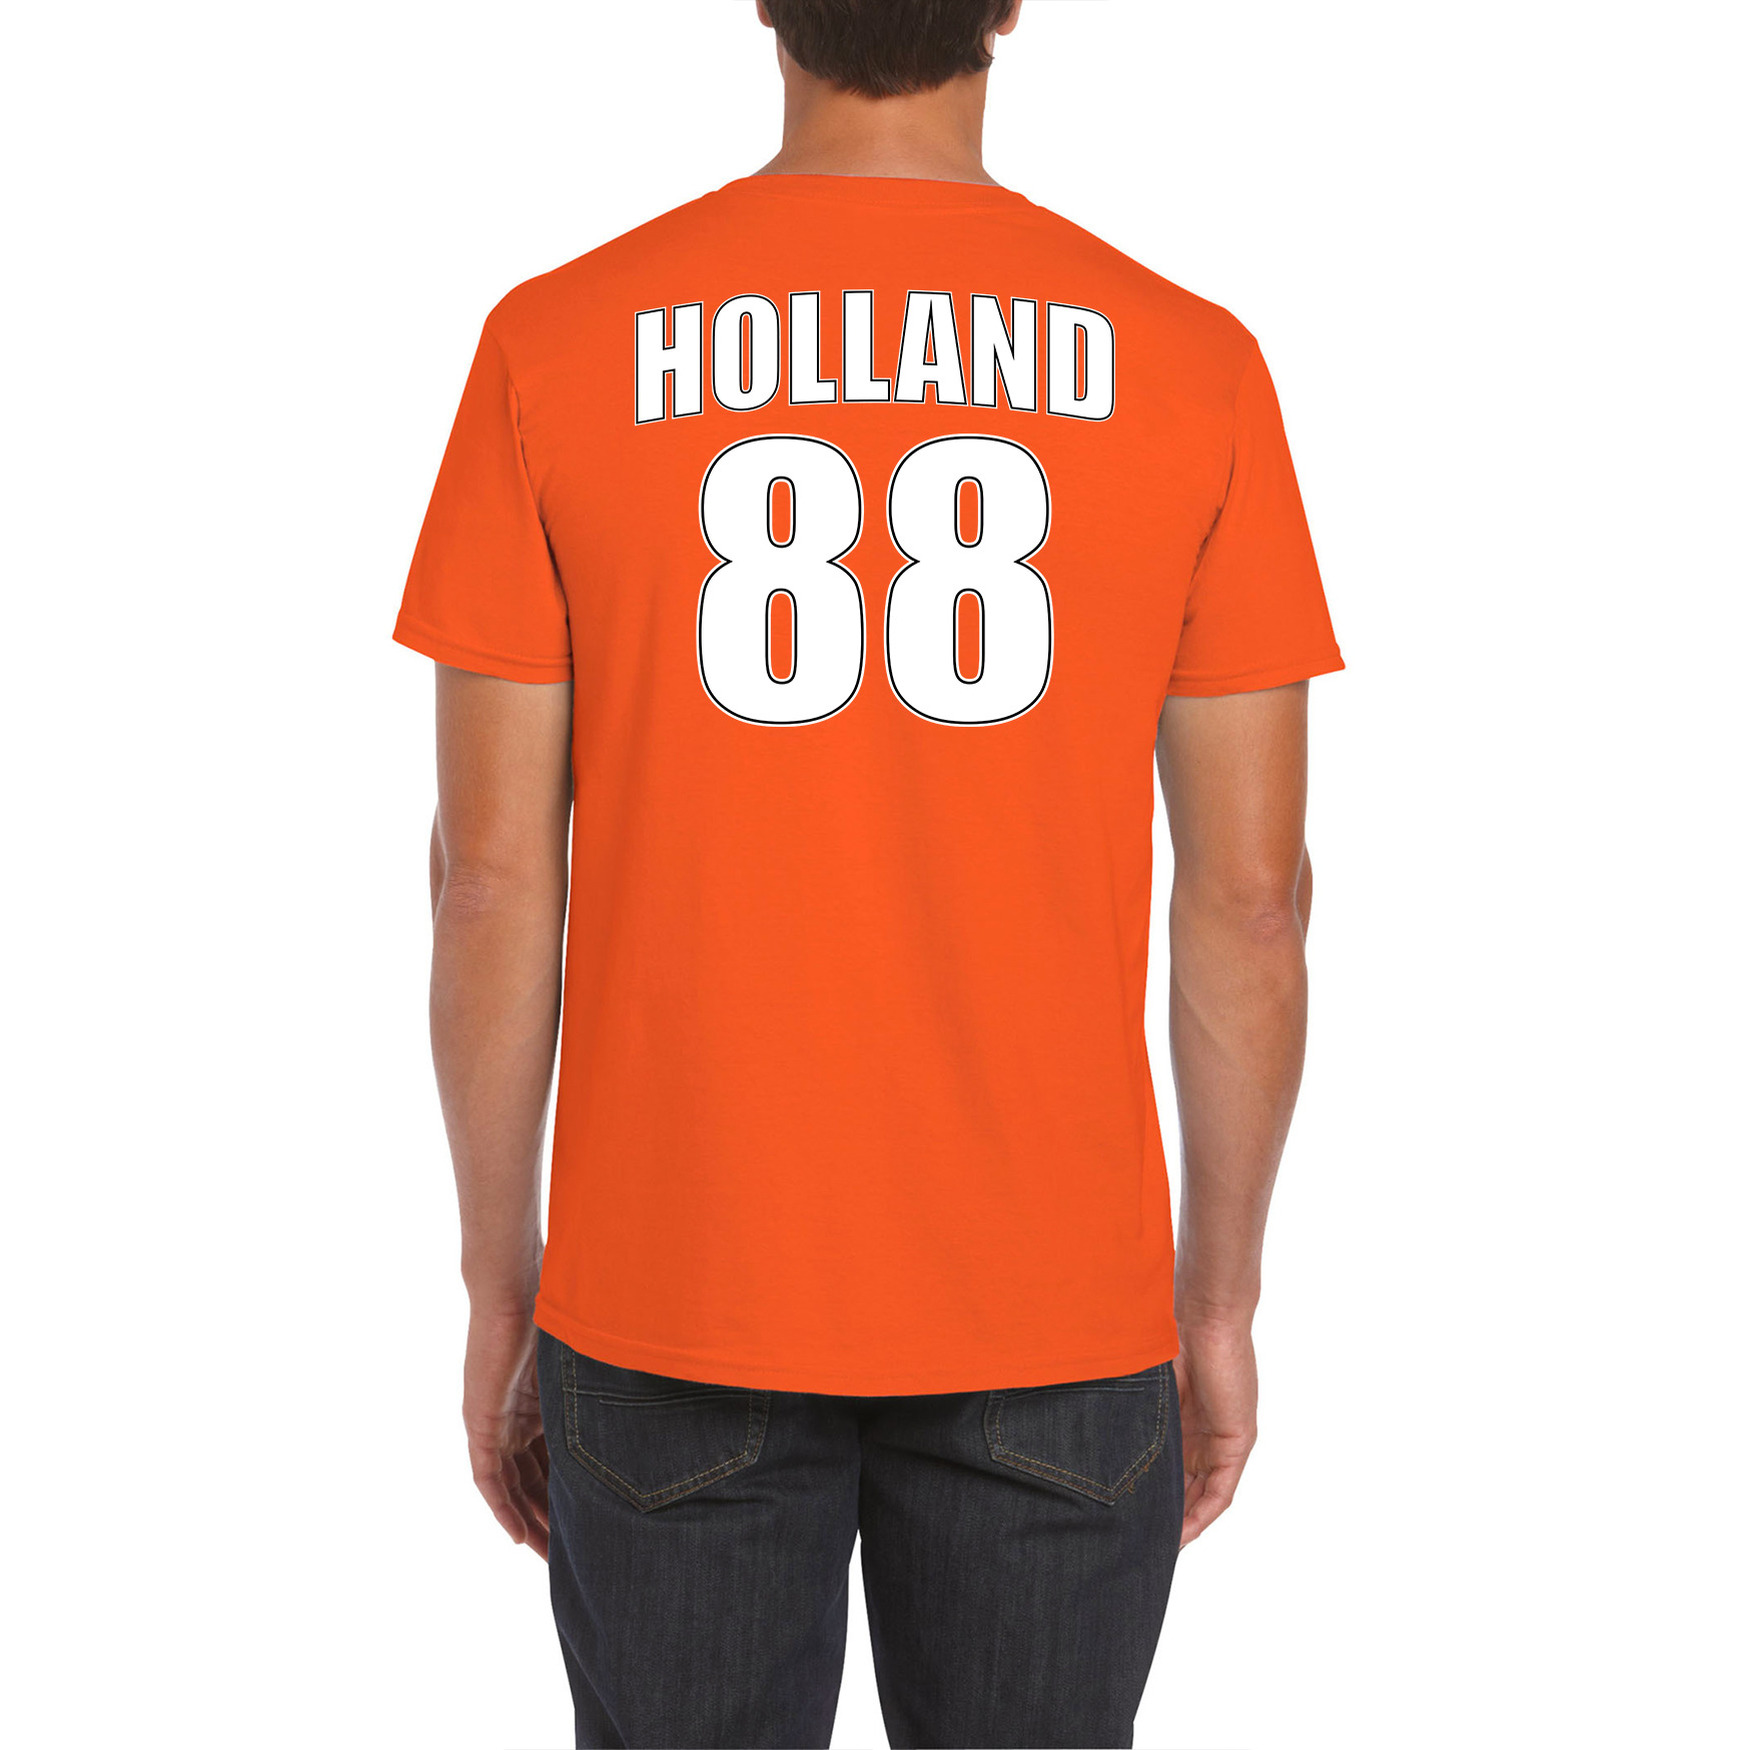 Oranje supporter t-shirt met rugnummer 88 - Holland - Nederland fan shirt voor heren